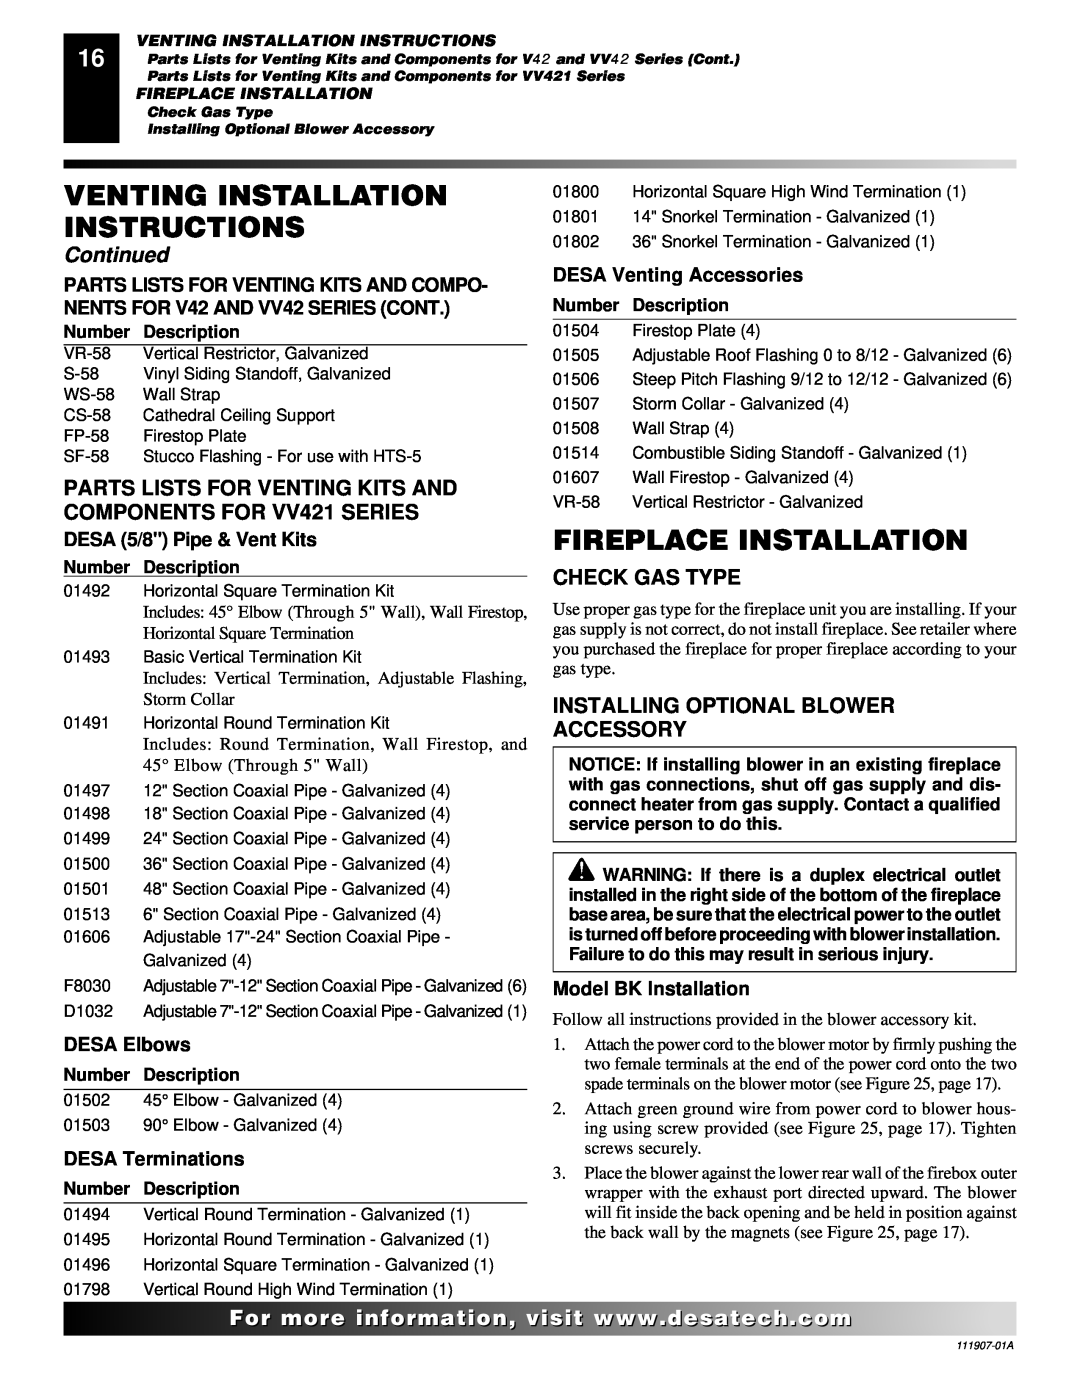 Desa (V)V42ENA(1) Fireplace Installation, Check Gas Type, Installing Optional Blower Accessory, DESA 5/8 Pipe & Vent Kits 